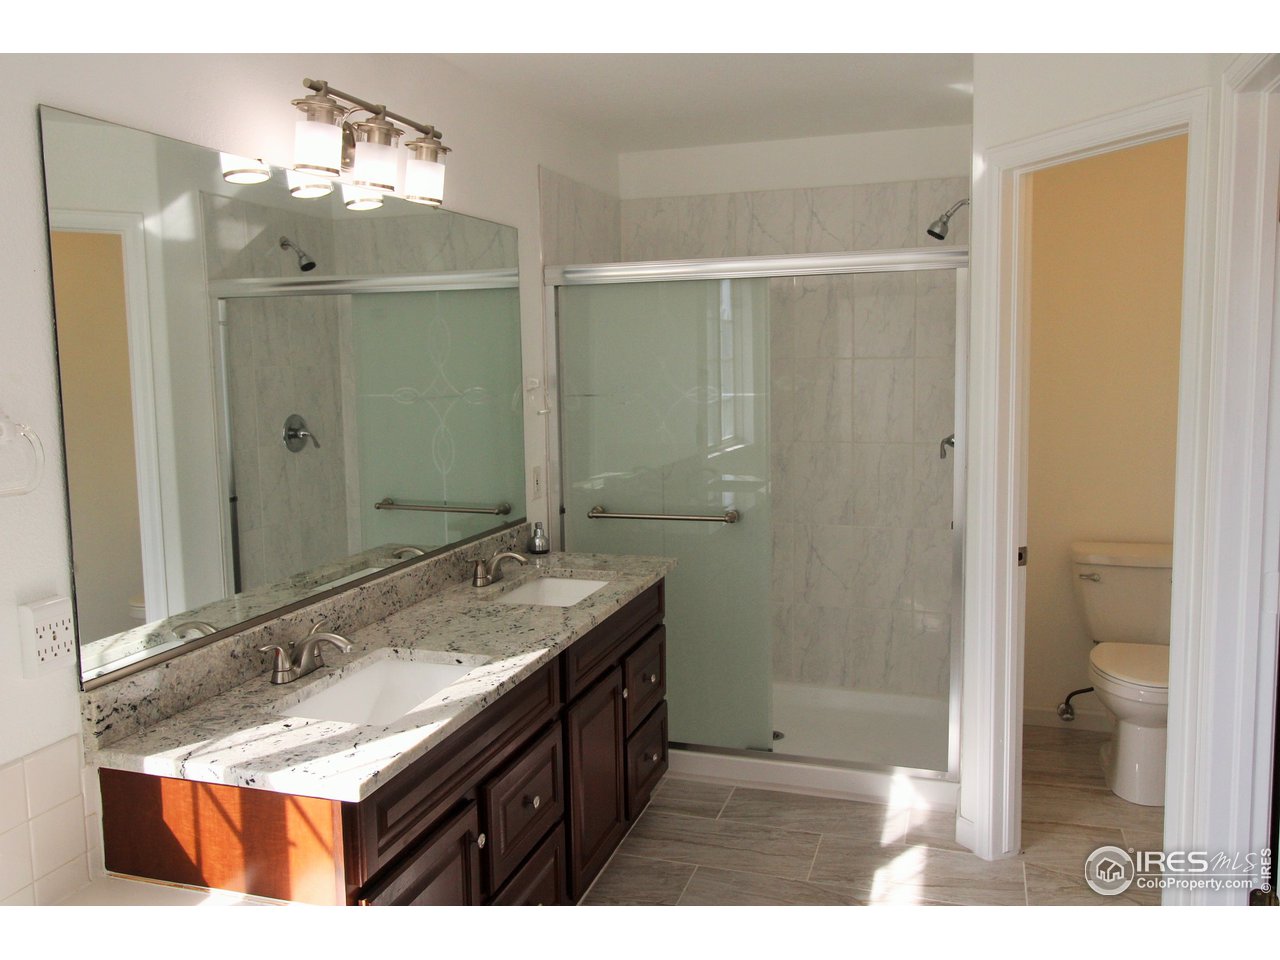 5-piece master bathroom with big shower, double vanity with granite countertops, tiled floors